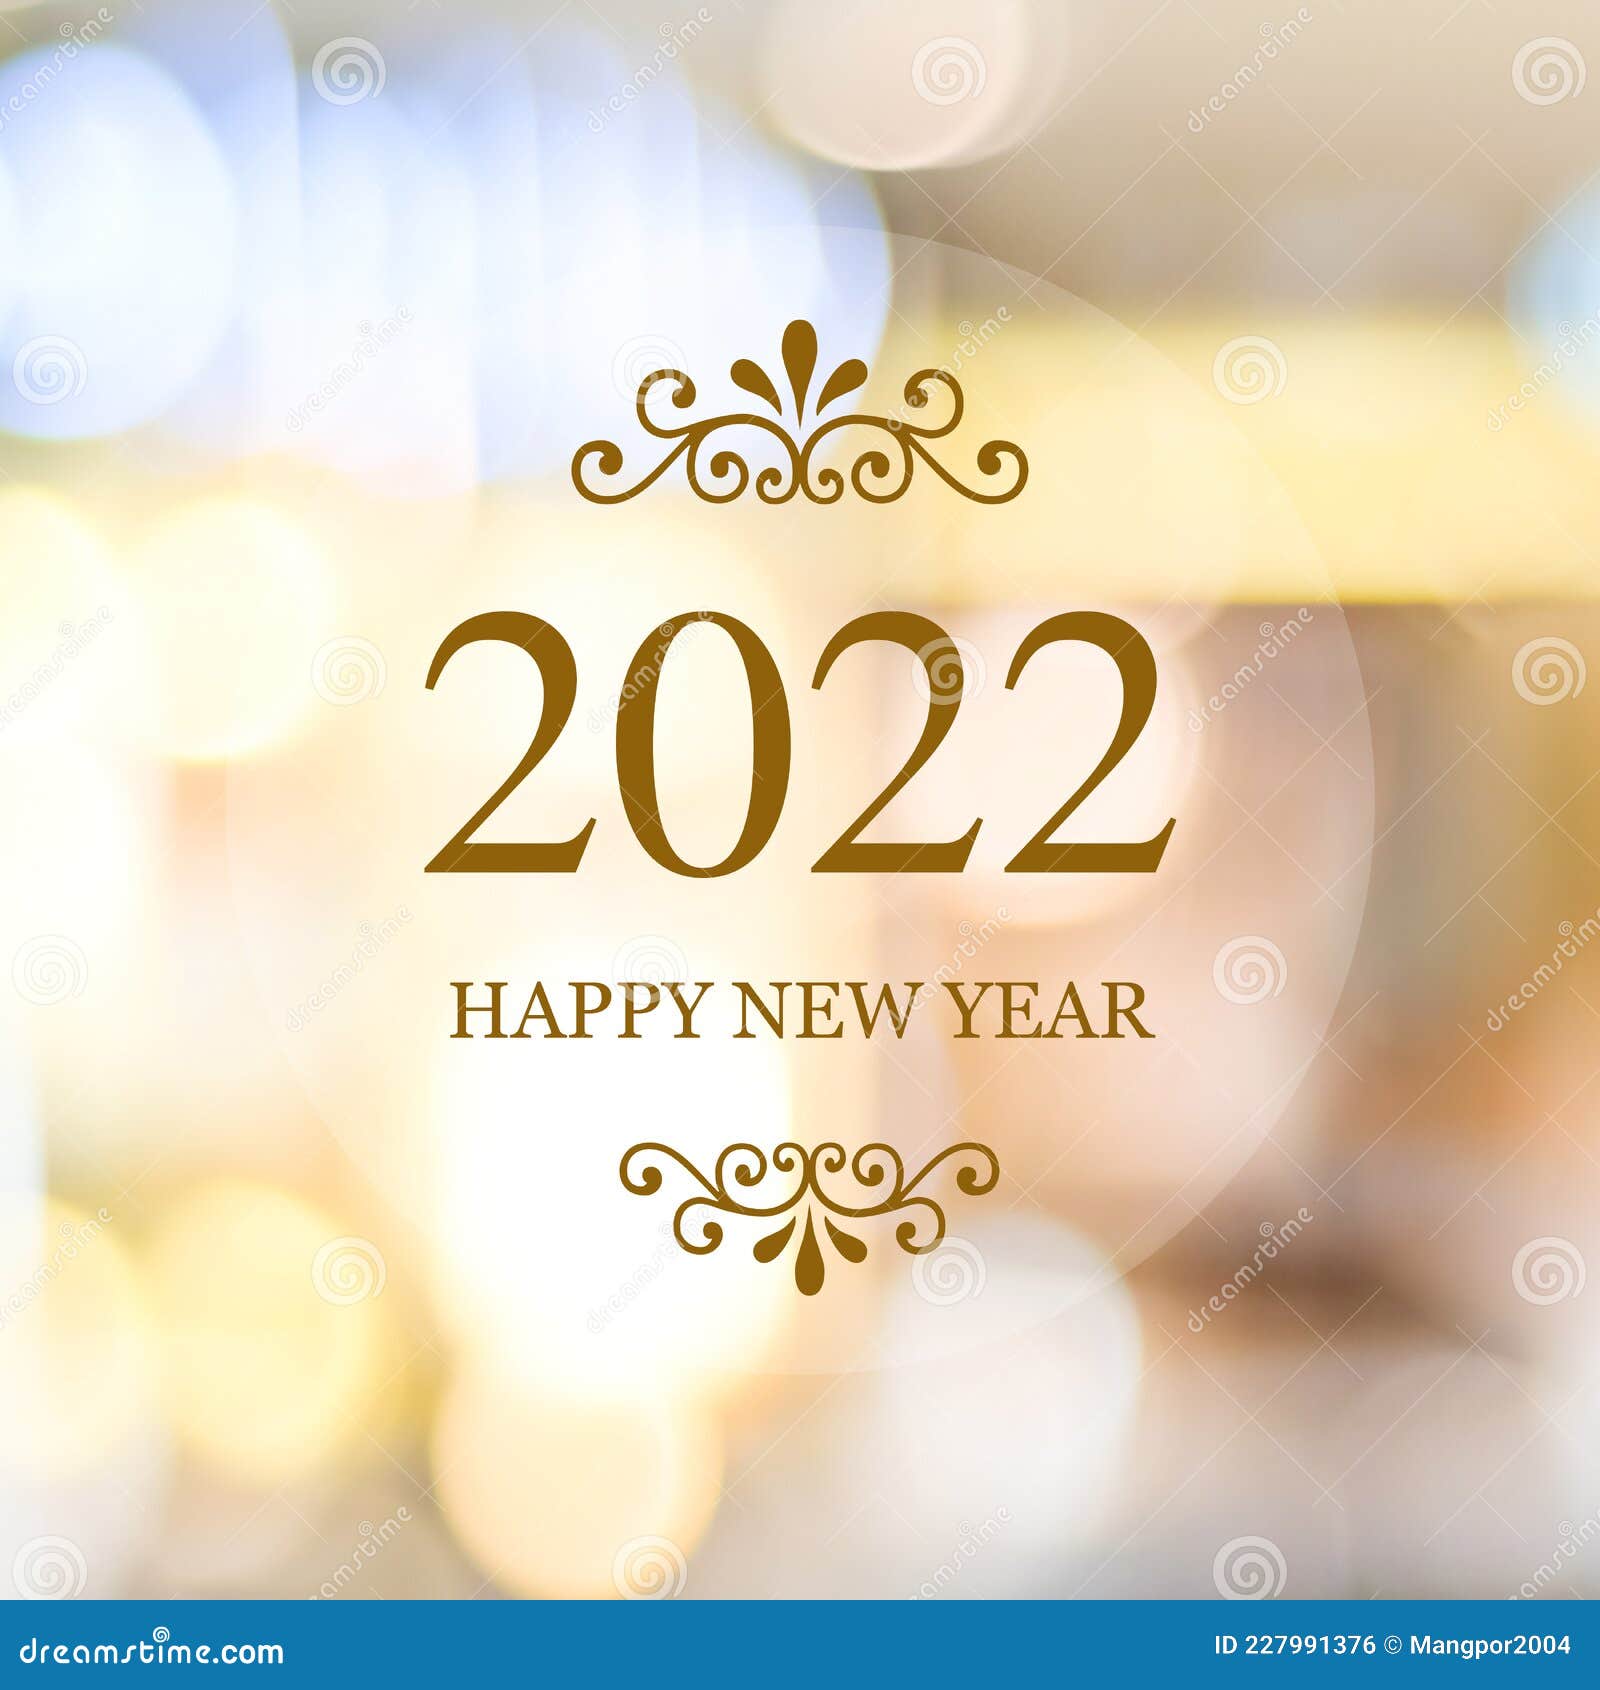 New Year 2022 Greeting Card